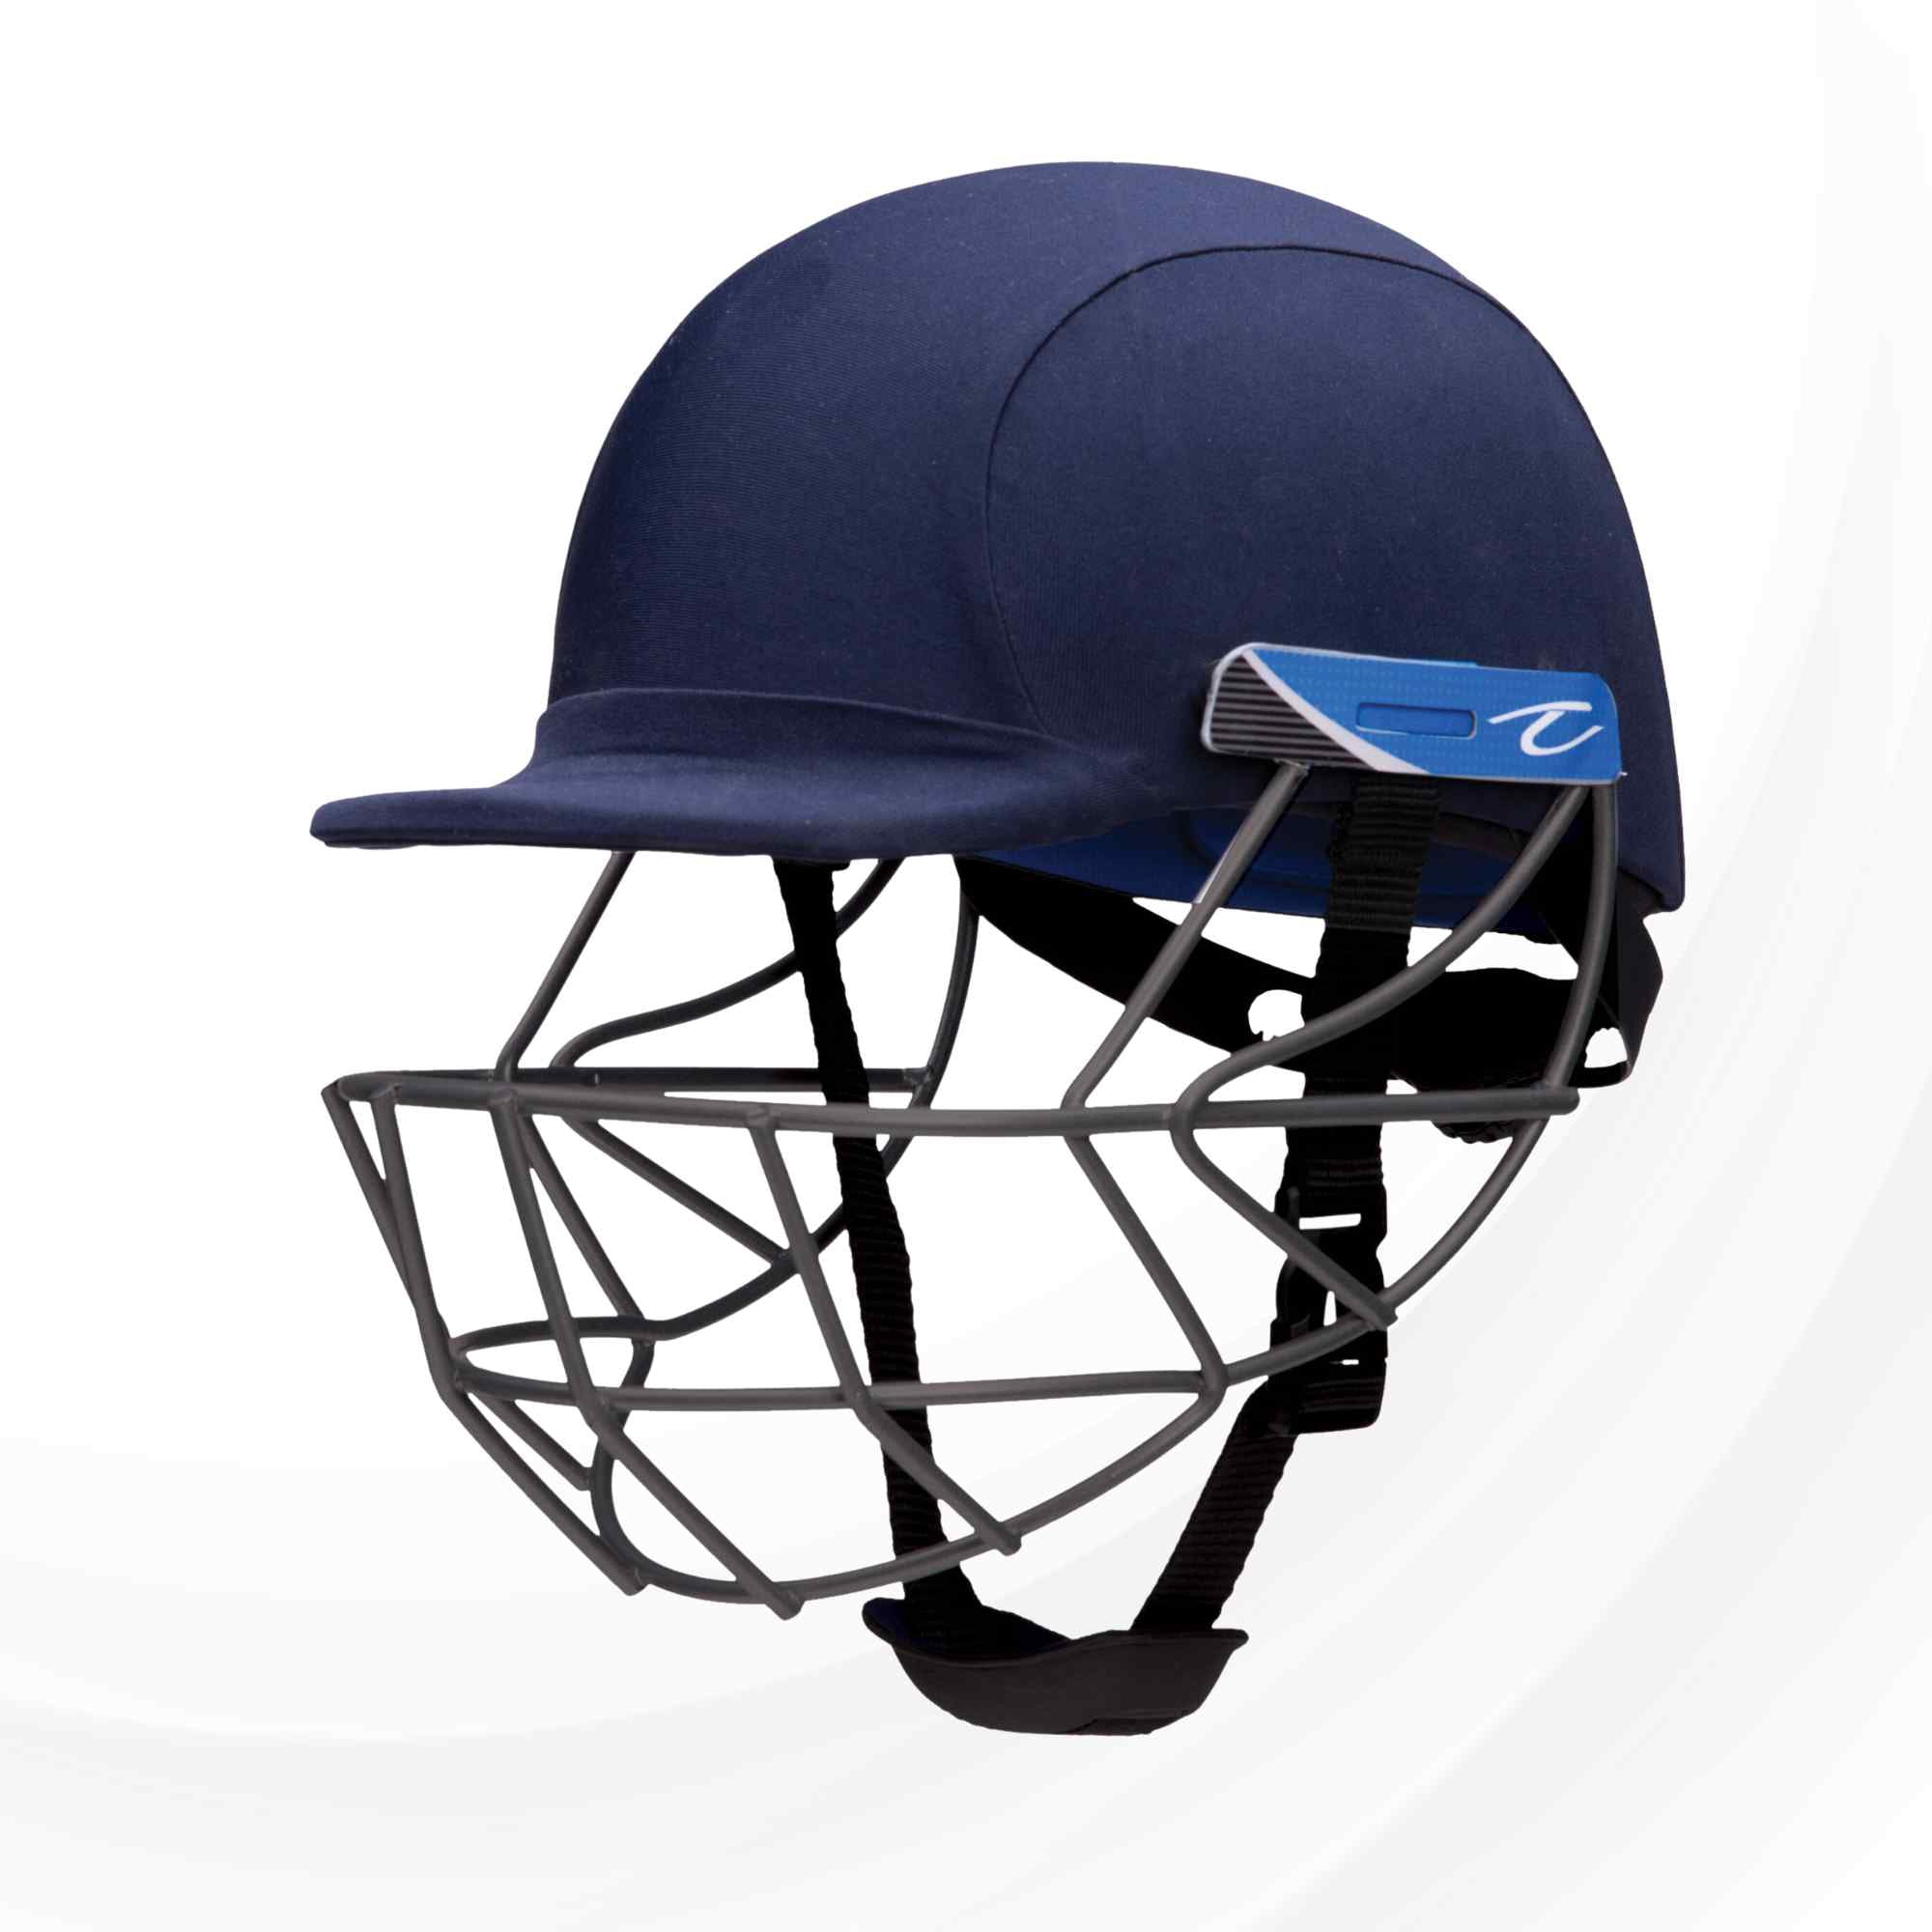 Forma Pro Axis Cricket Helmet